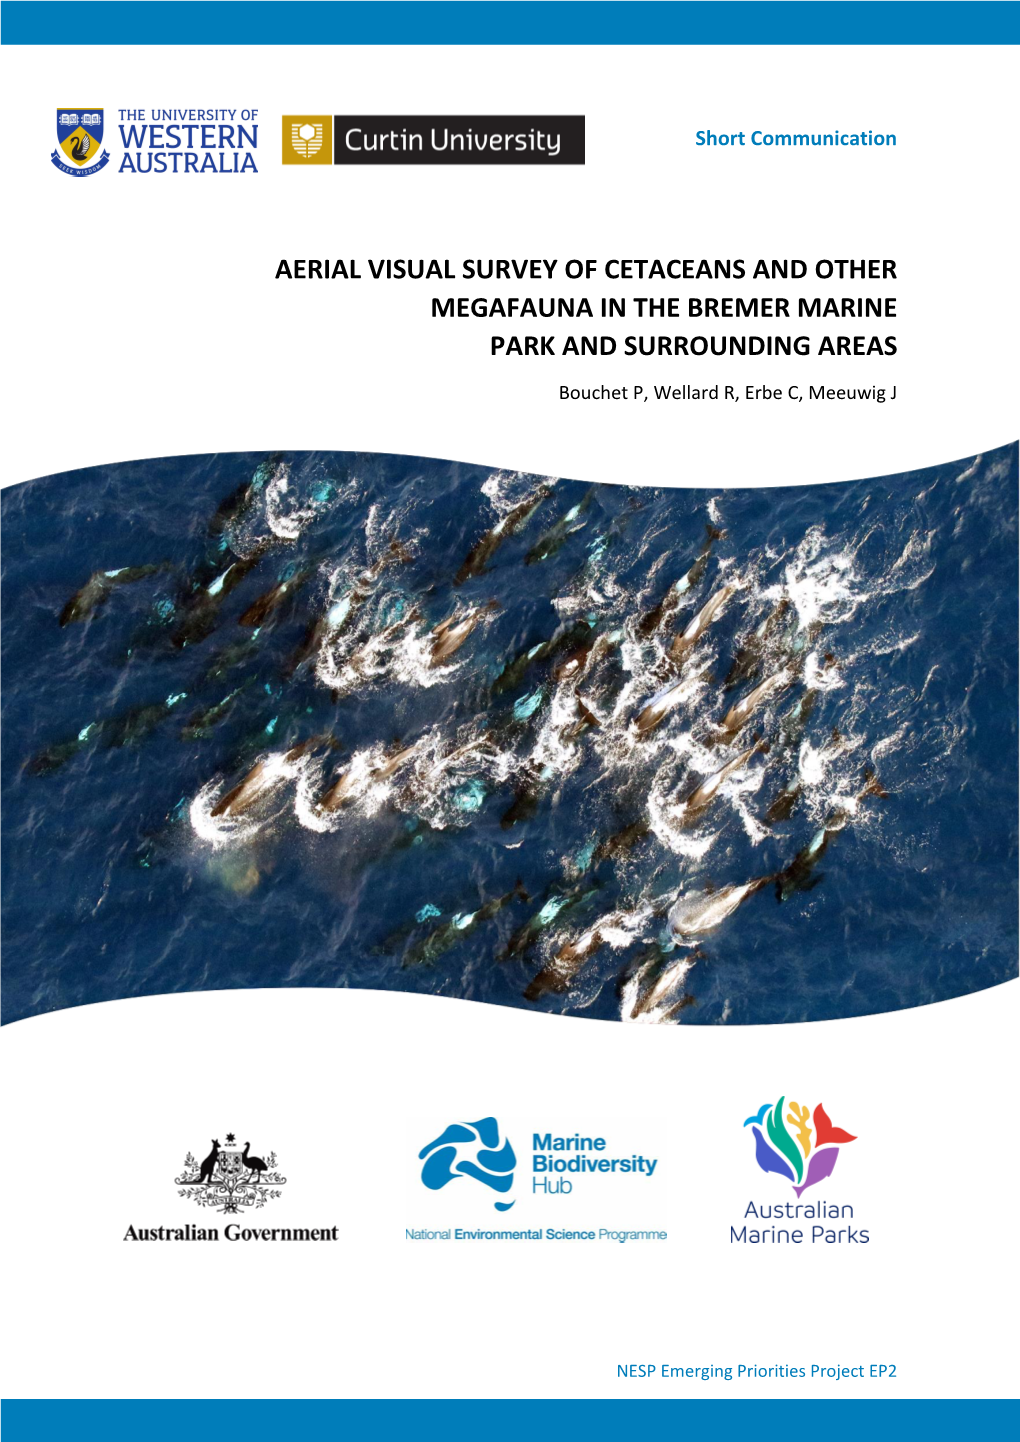 Bouchet Et Al Aerial Visual Survey of Cetaceans Megafauna